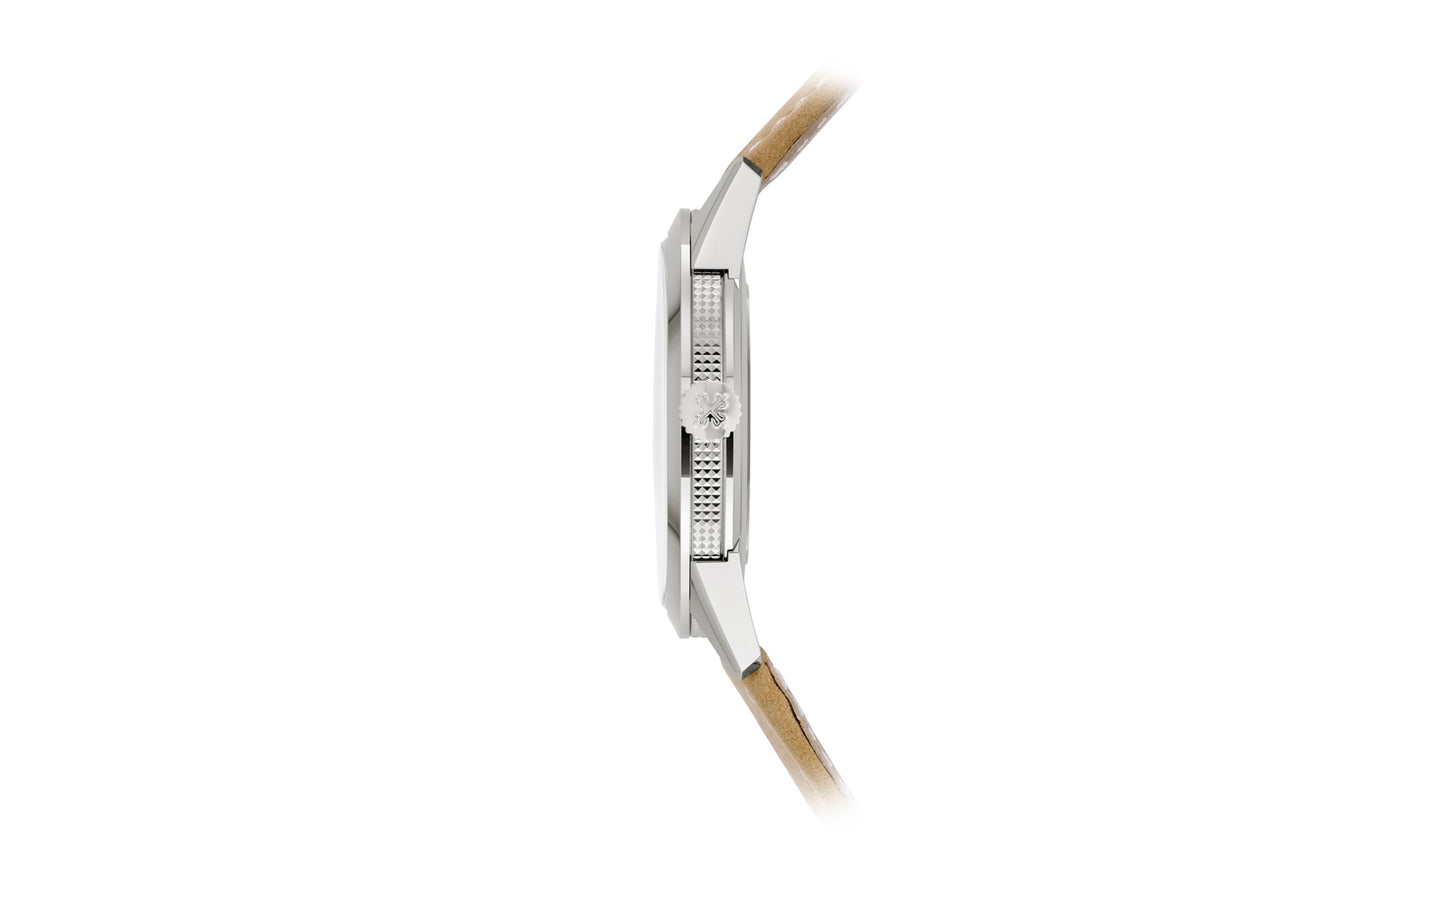 Patek Philippe Calatrava, 18k White Gold, 40mm, Ref# 5226G-001, Right